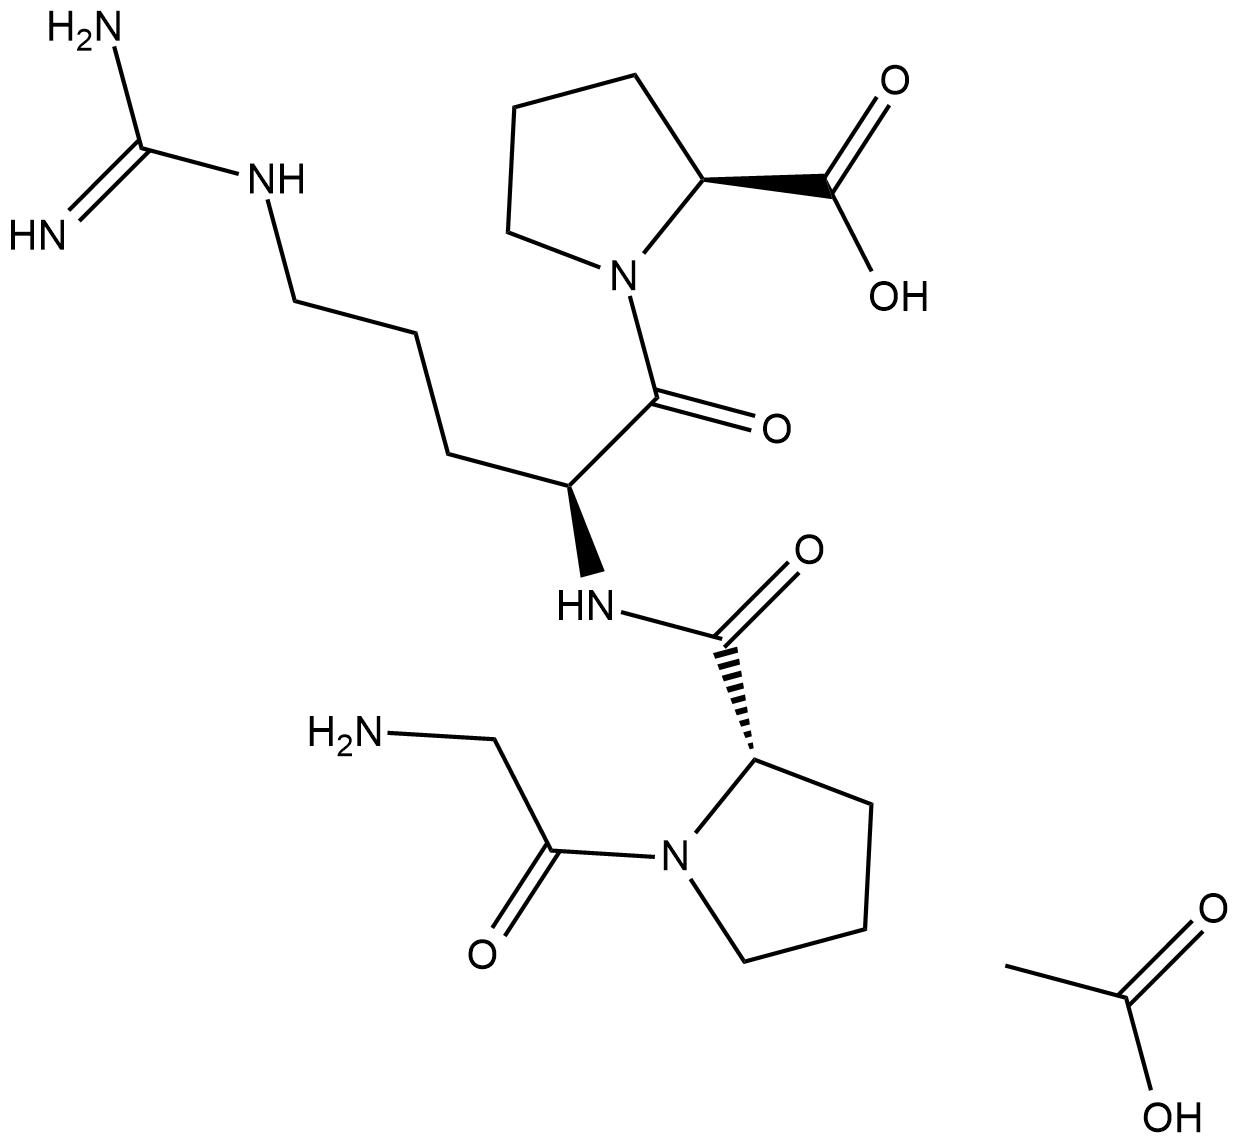 H-Gly-Pro-Arg-Pro-OH (acetate) Chemische Struktur